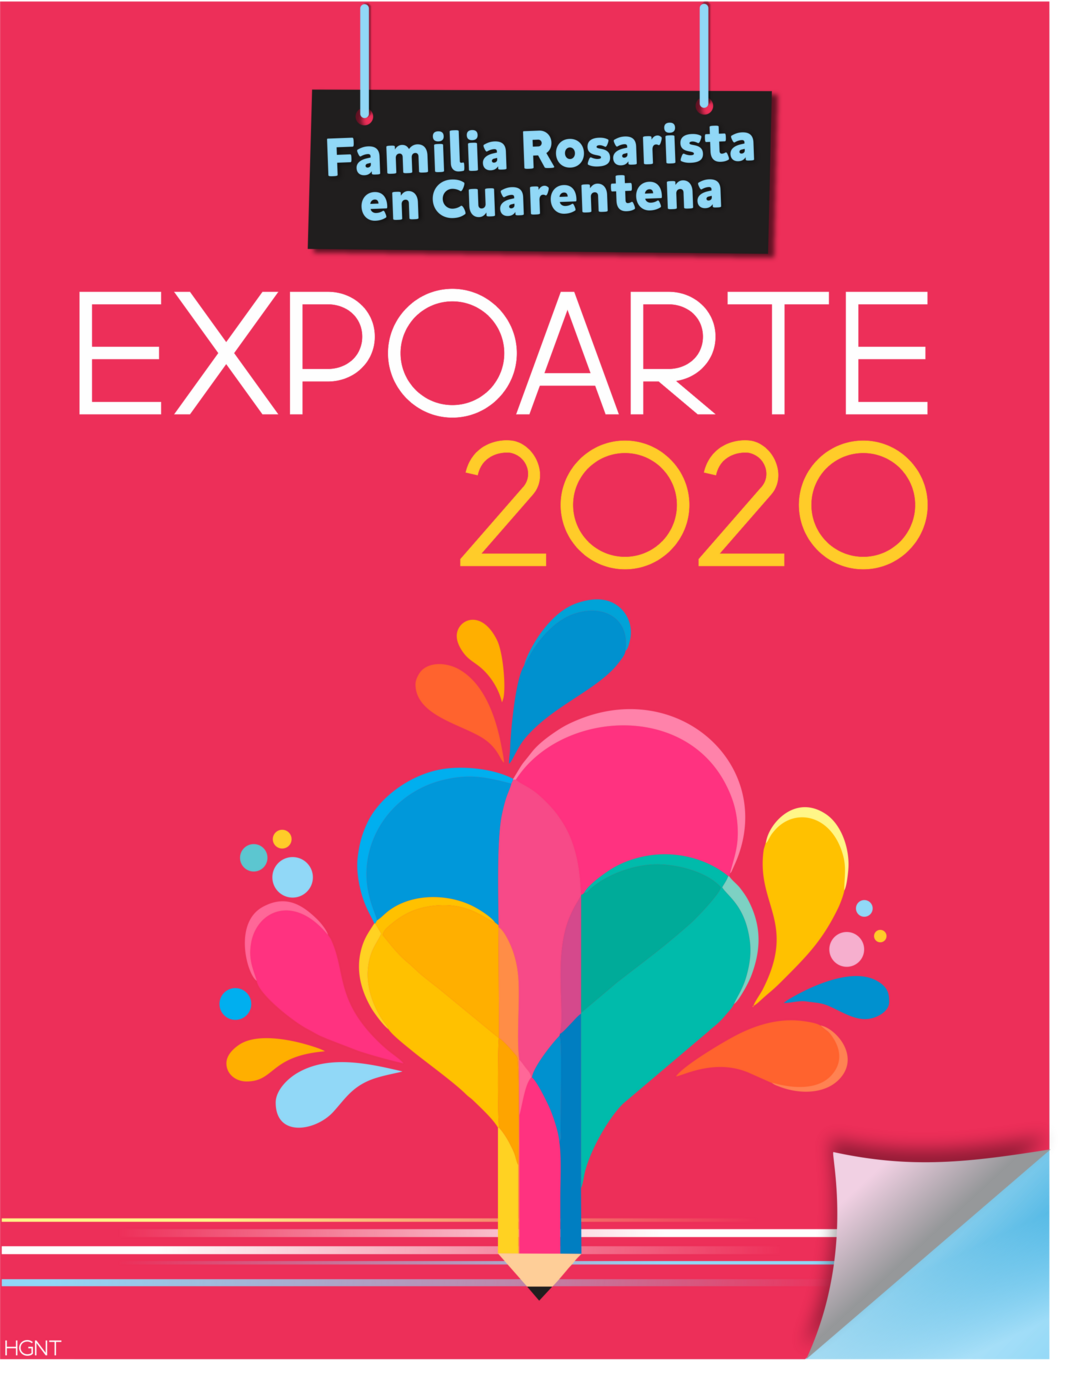 EXPOARTE 2020